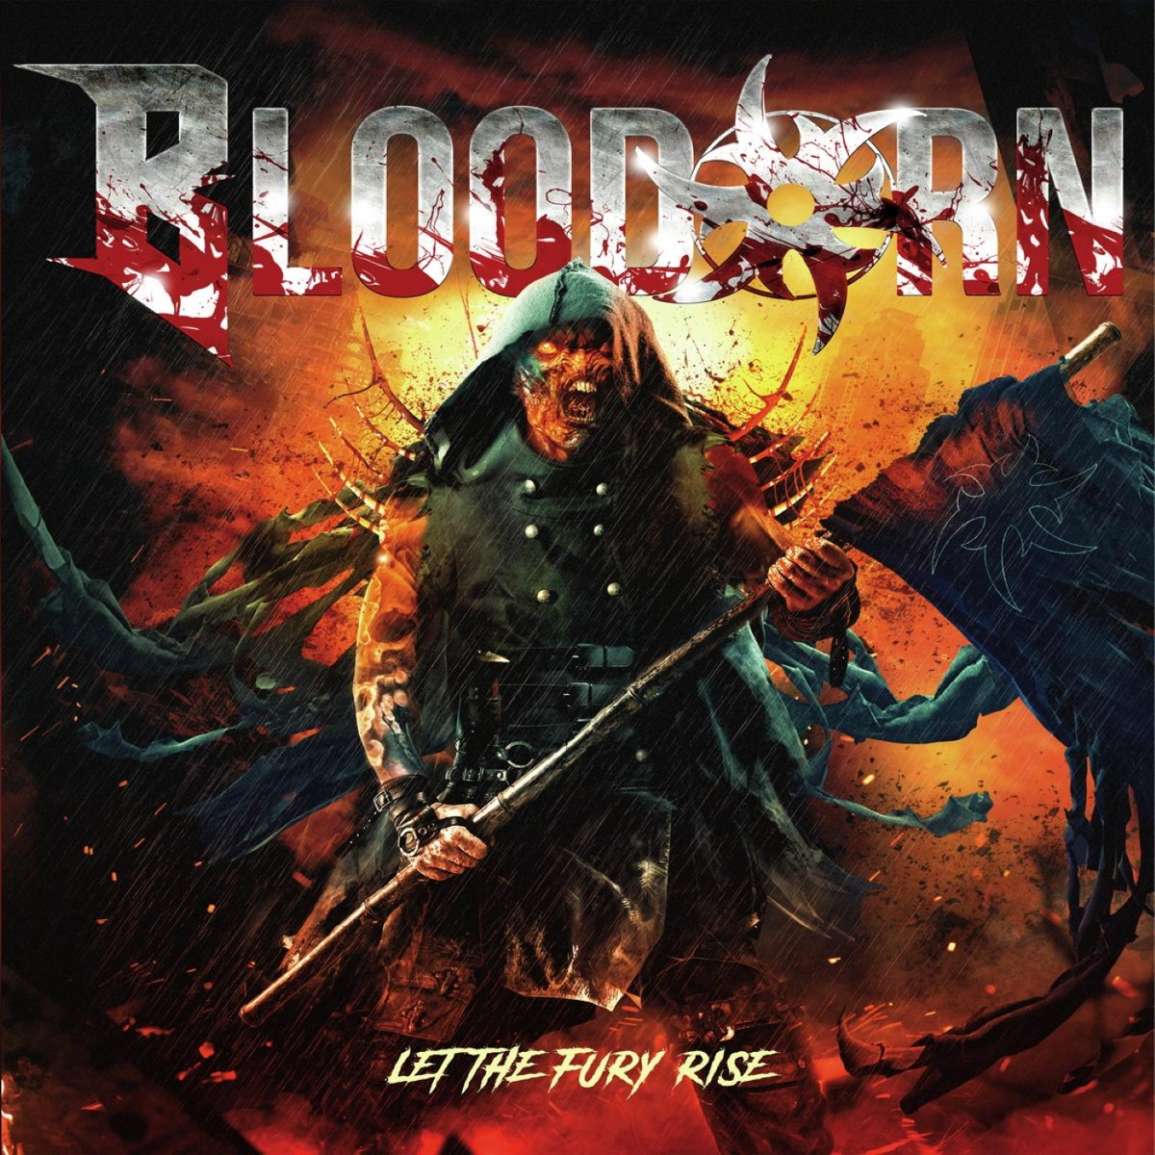 Bloodorn "Let The Fury Rise" Orange / Black Marbled Vinyl - PRE-ORDER